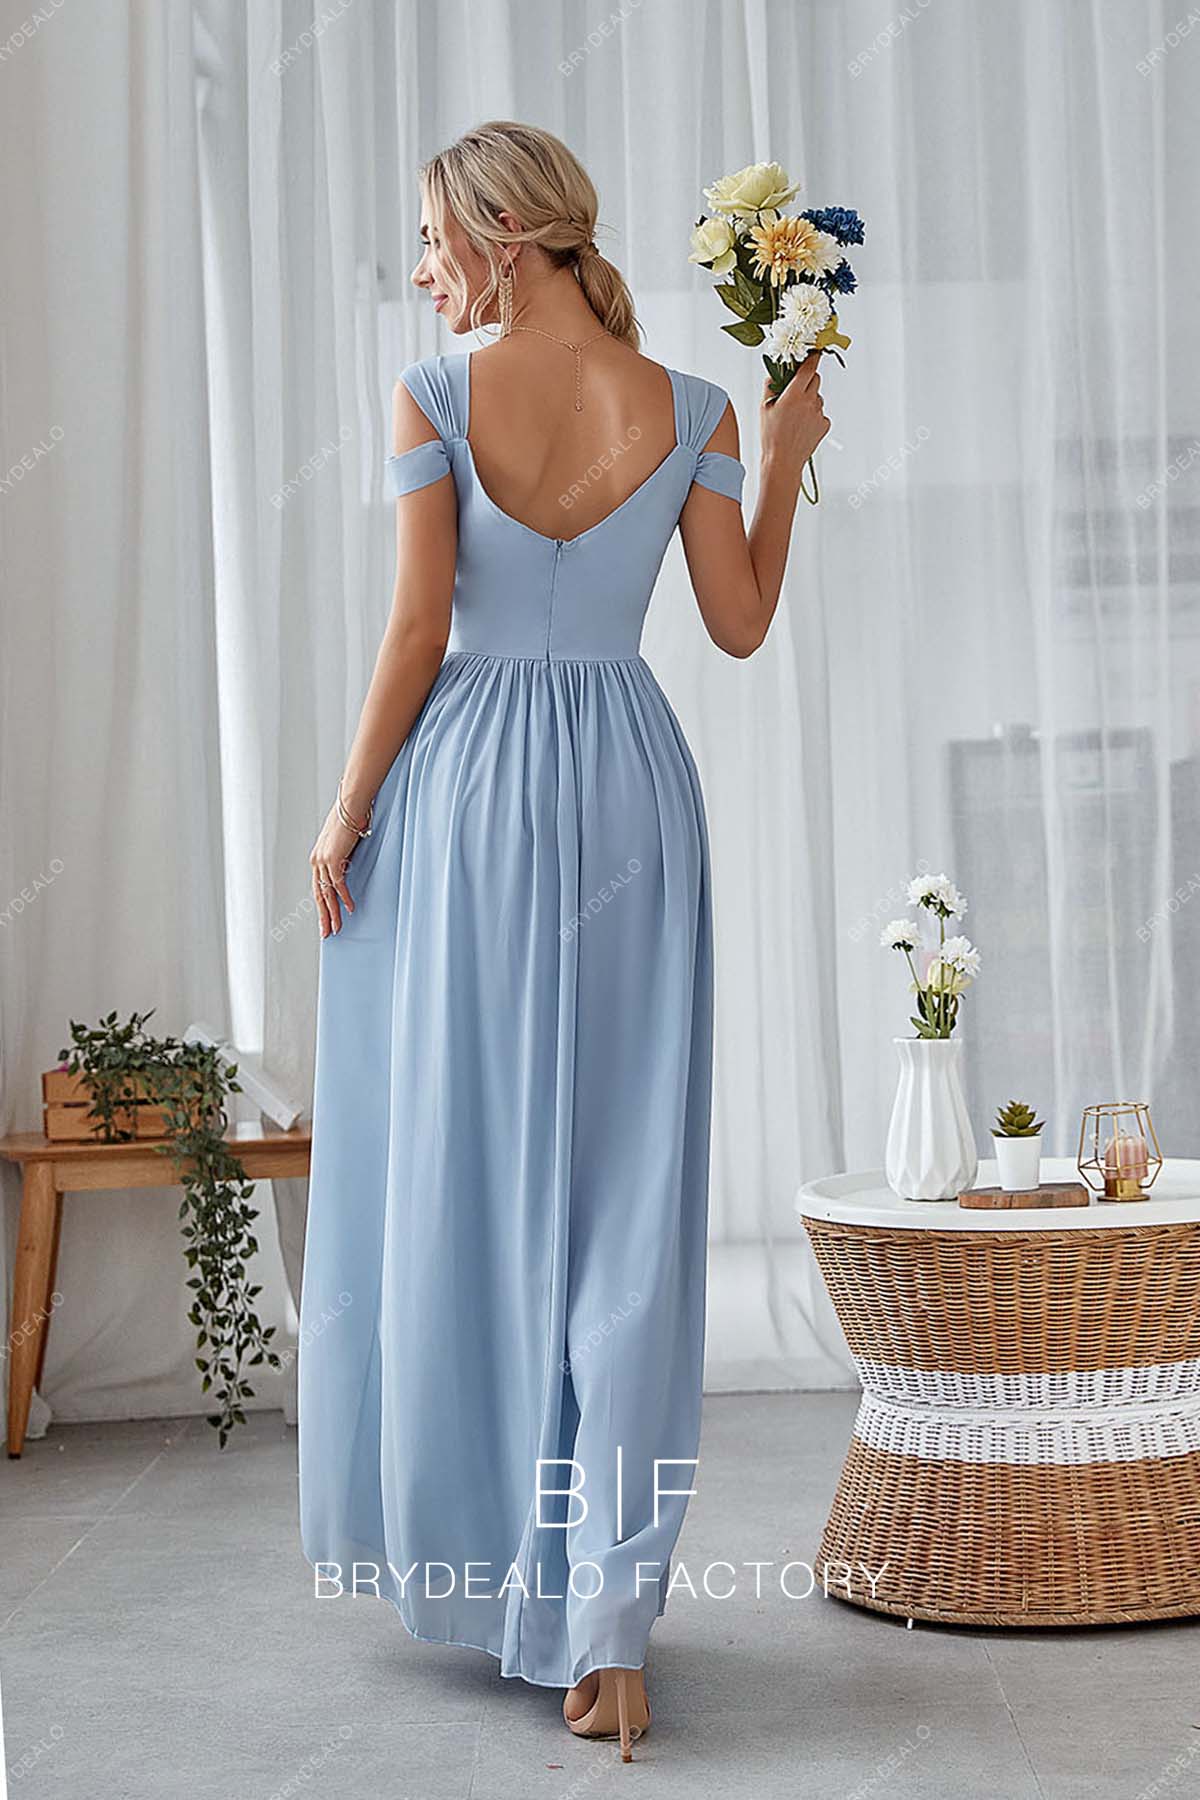 open back floor length blue bridesmaid dress